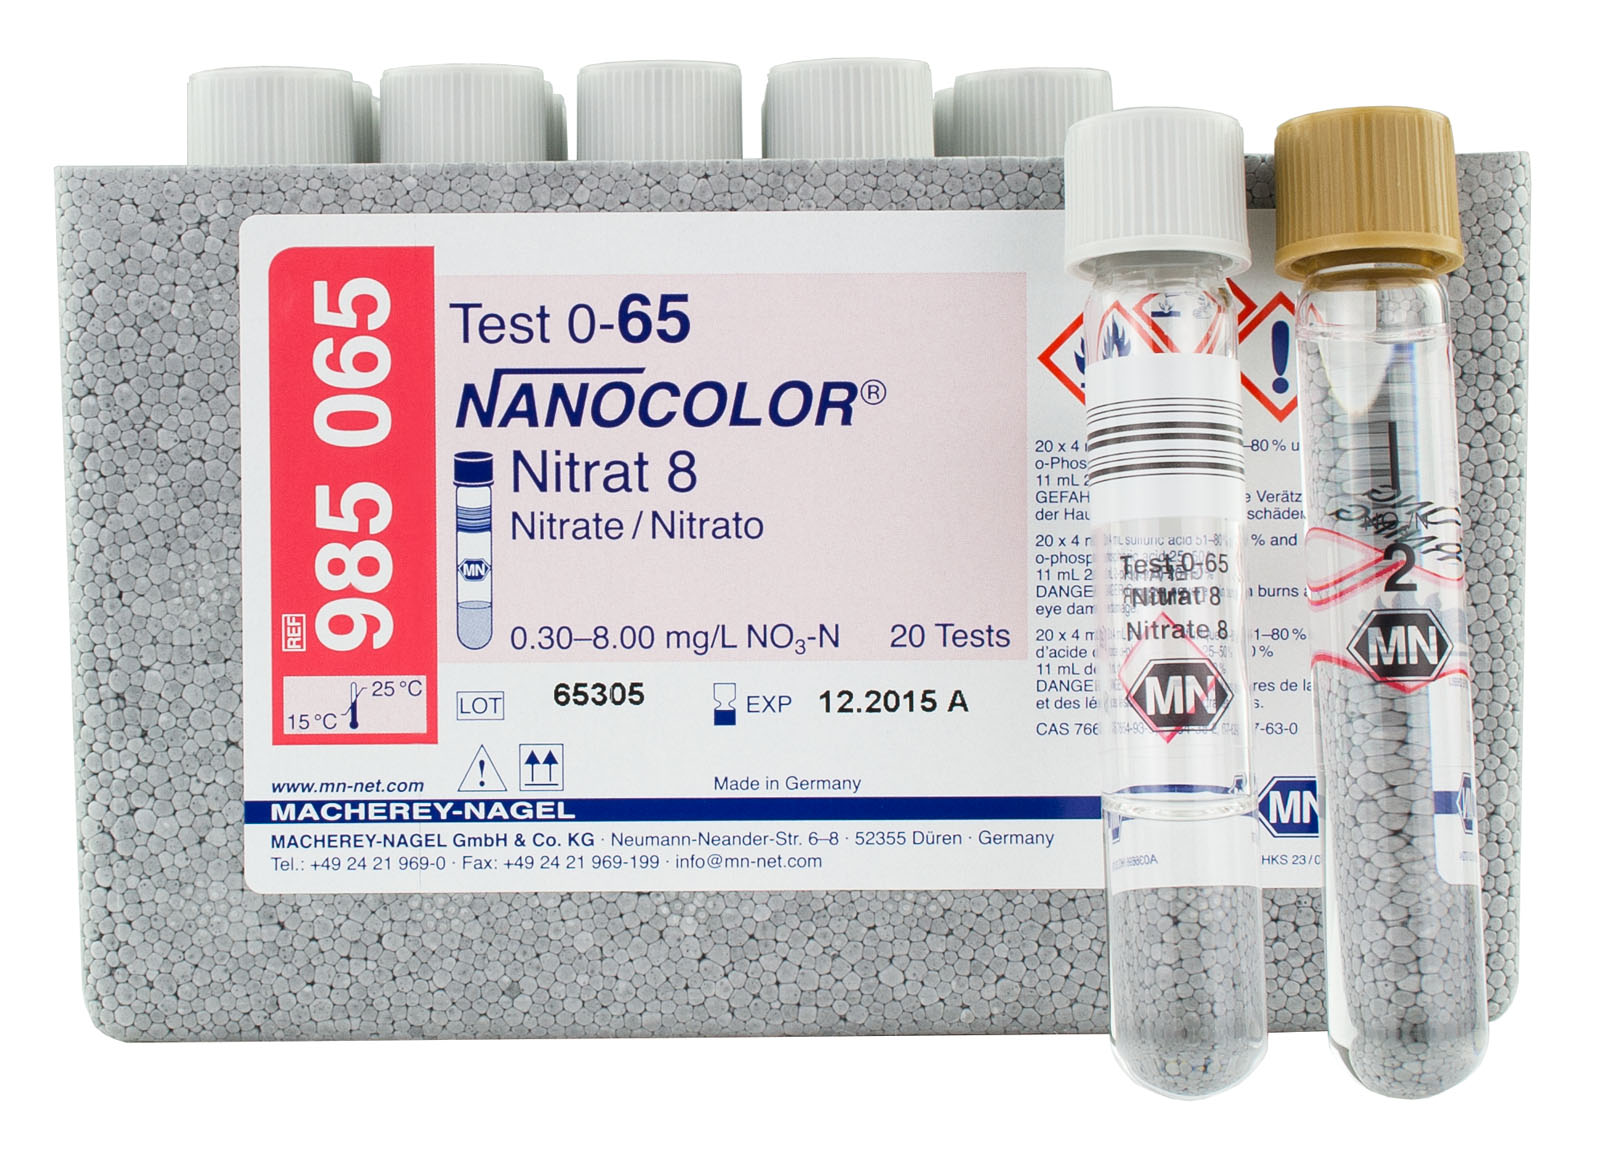 RUK NANOCOLOR- Nitrat 8 Test